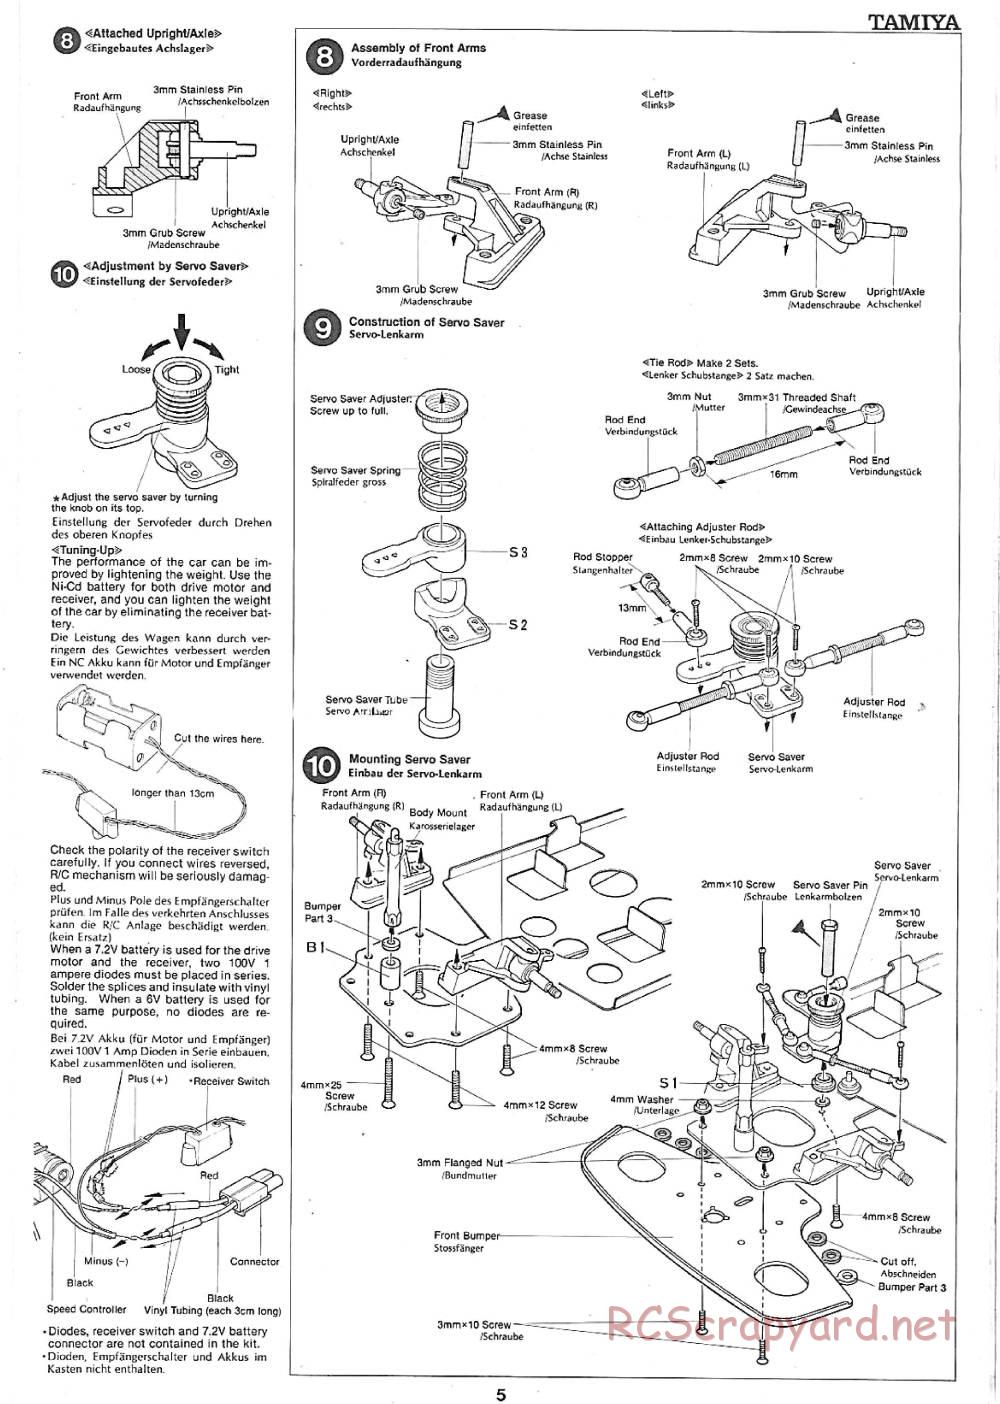 Tamiya - Renault 5 Turbo (CS) - 58026 - Manual - Page 5